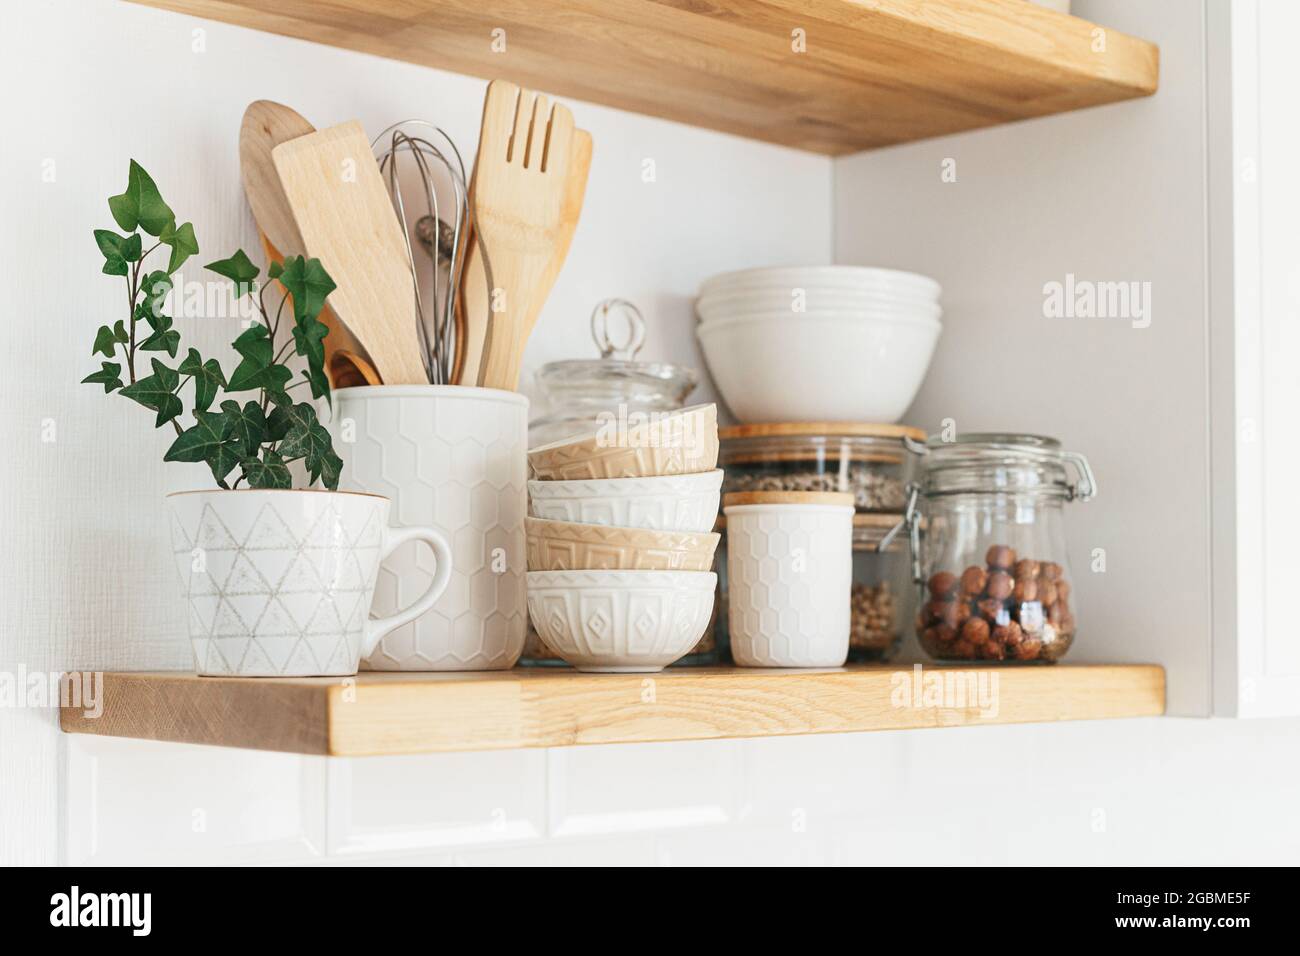 https://c8.alamy.com/comp/2GBME5F/eco-friendly-kitchen-zero-waste-home-concept-2GBME5F.jpg